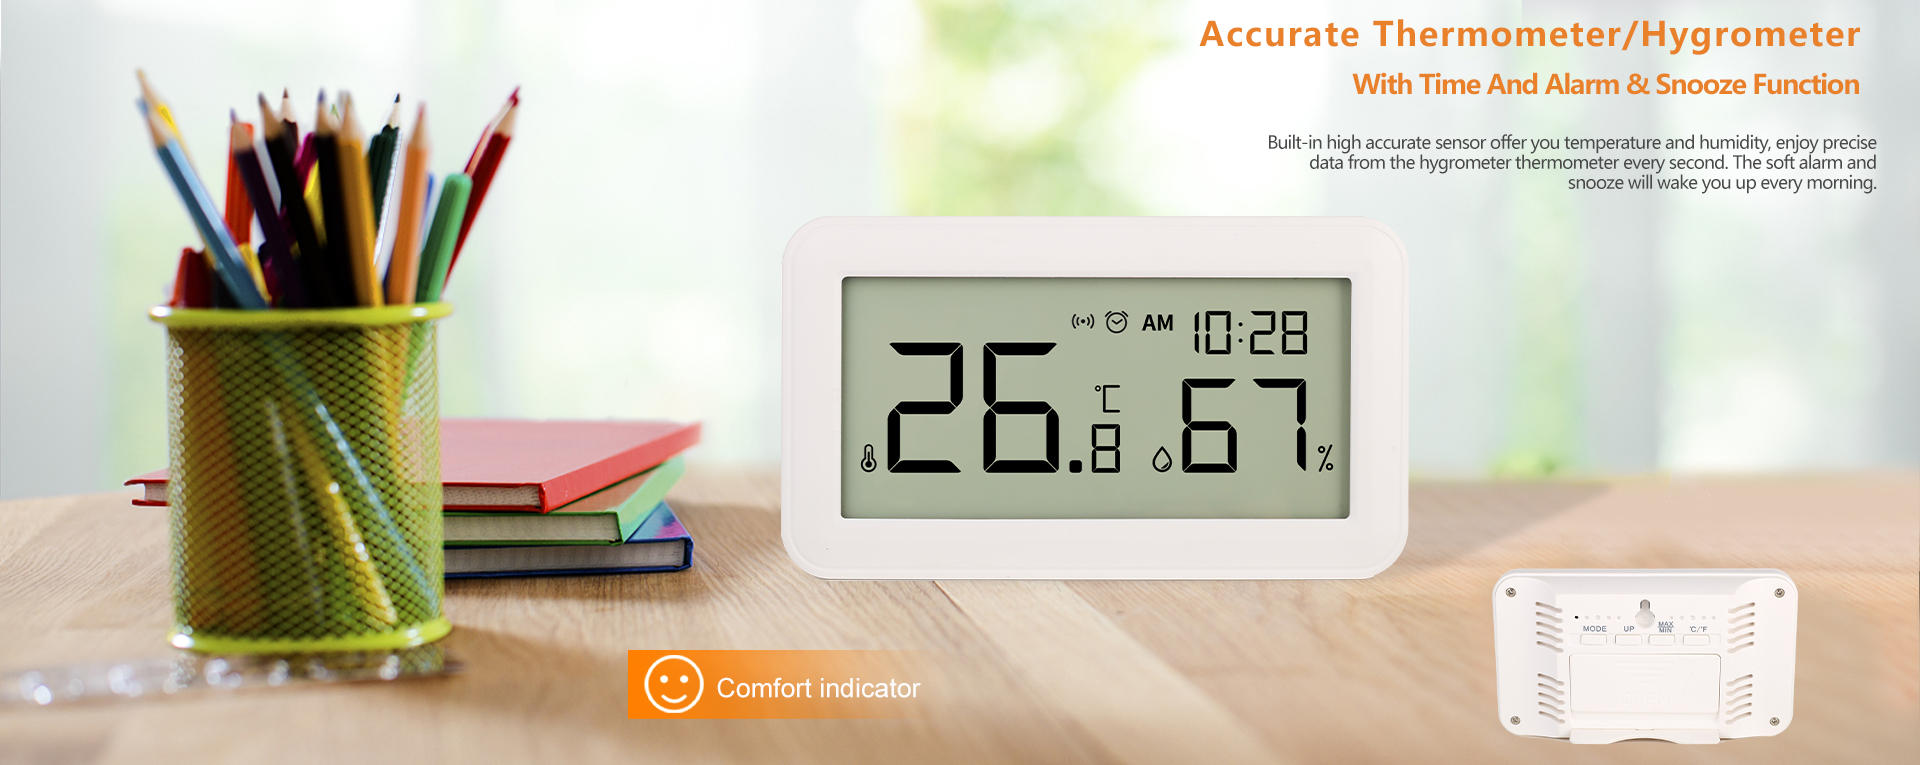 New LCD temperature and humidity alarm clock